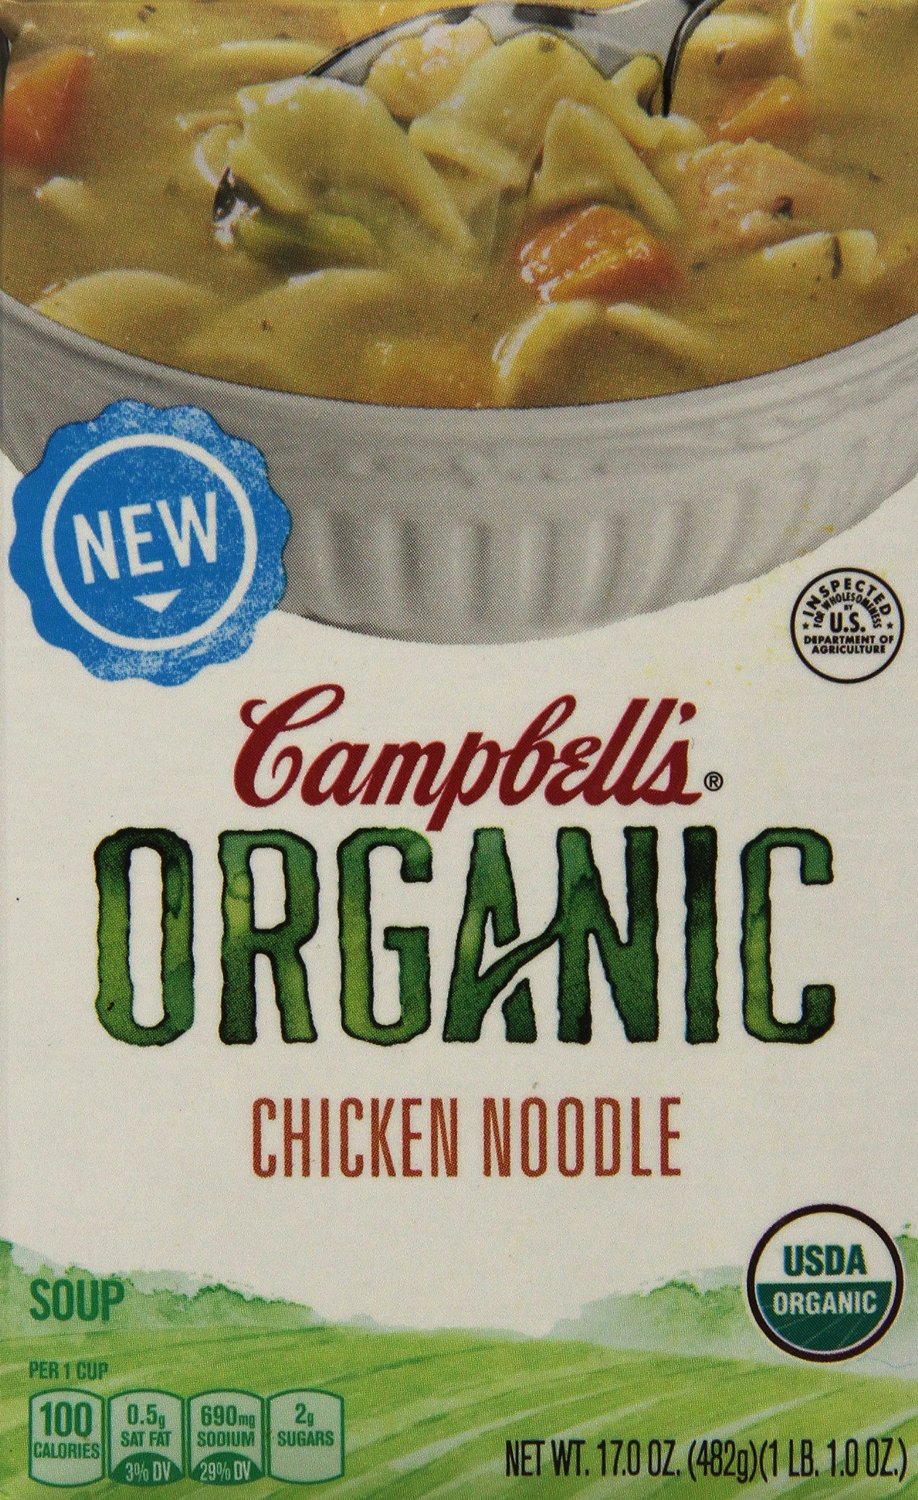 Campbells organic soup